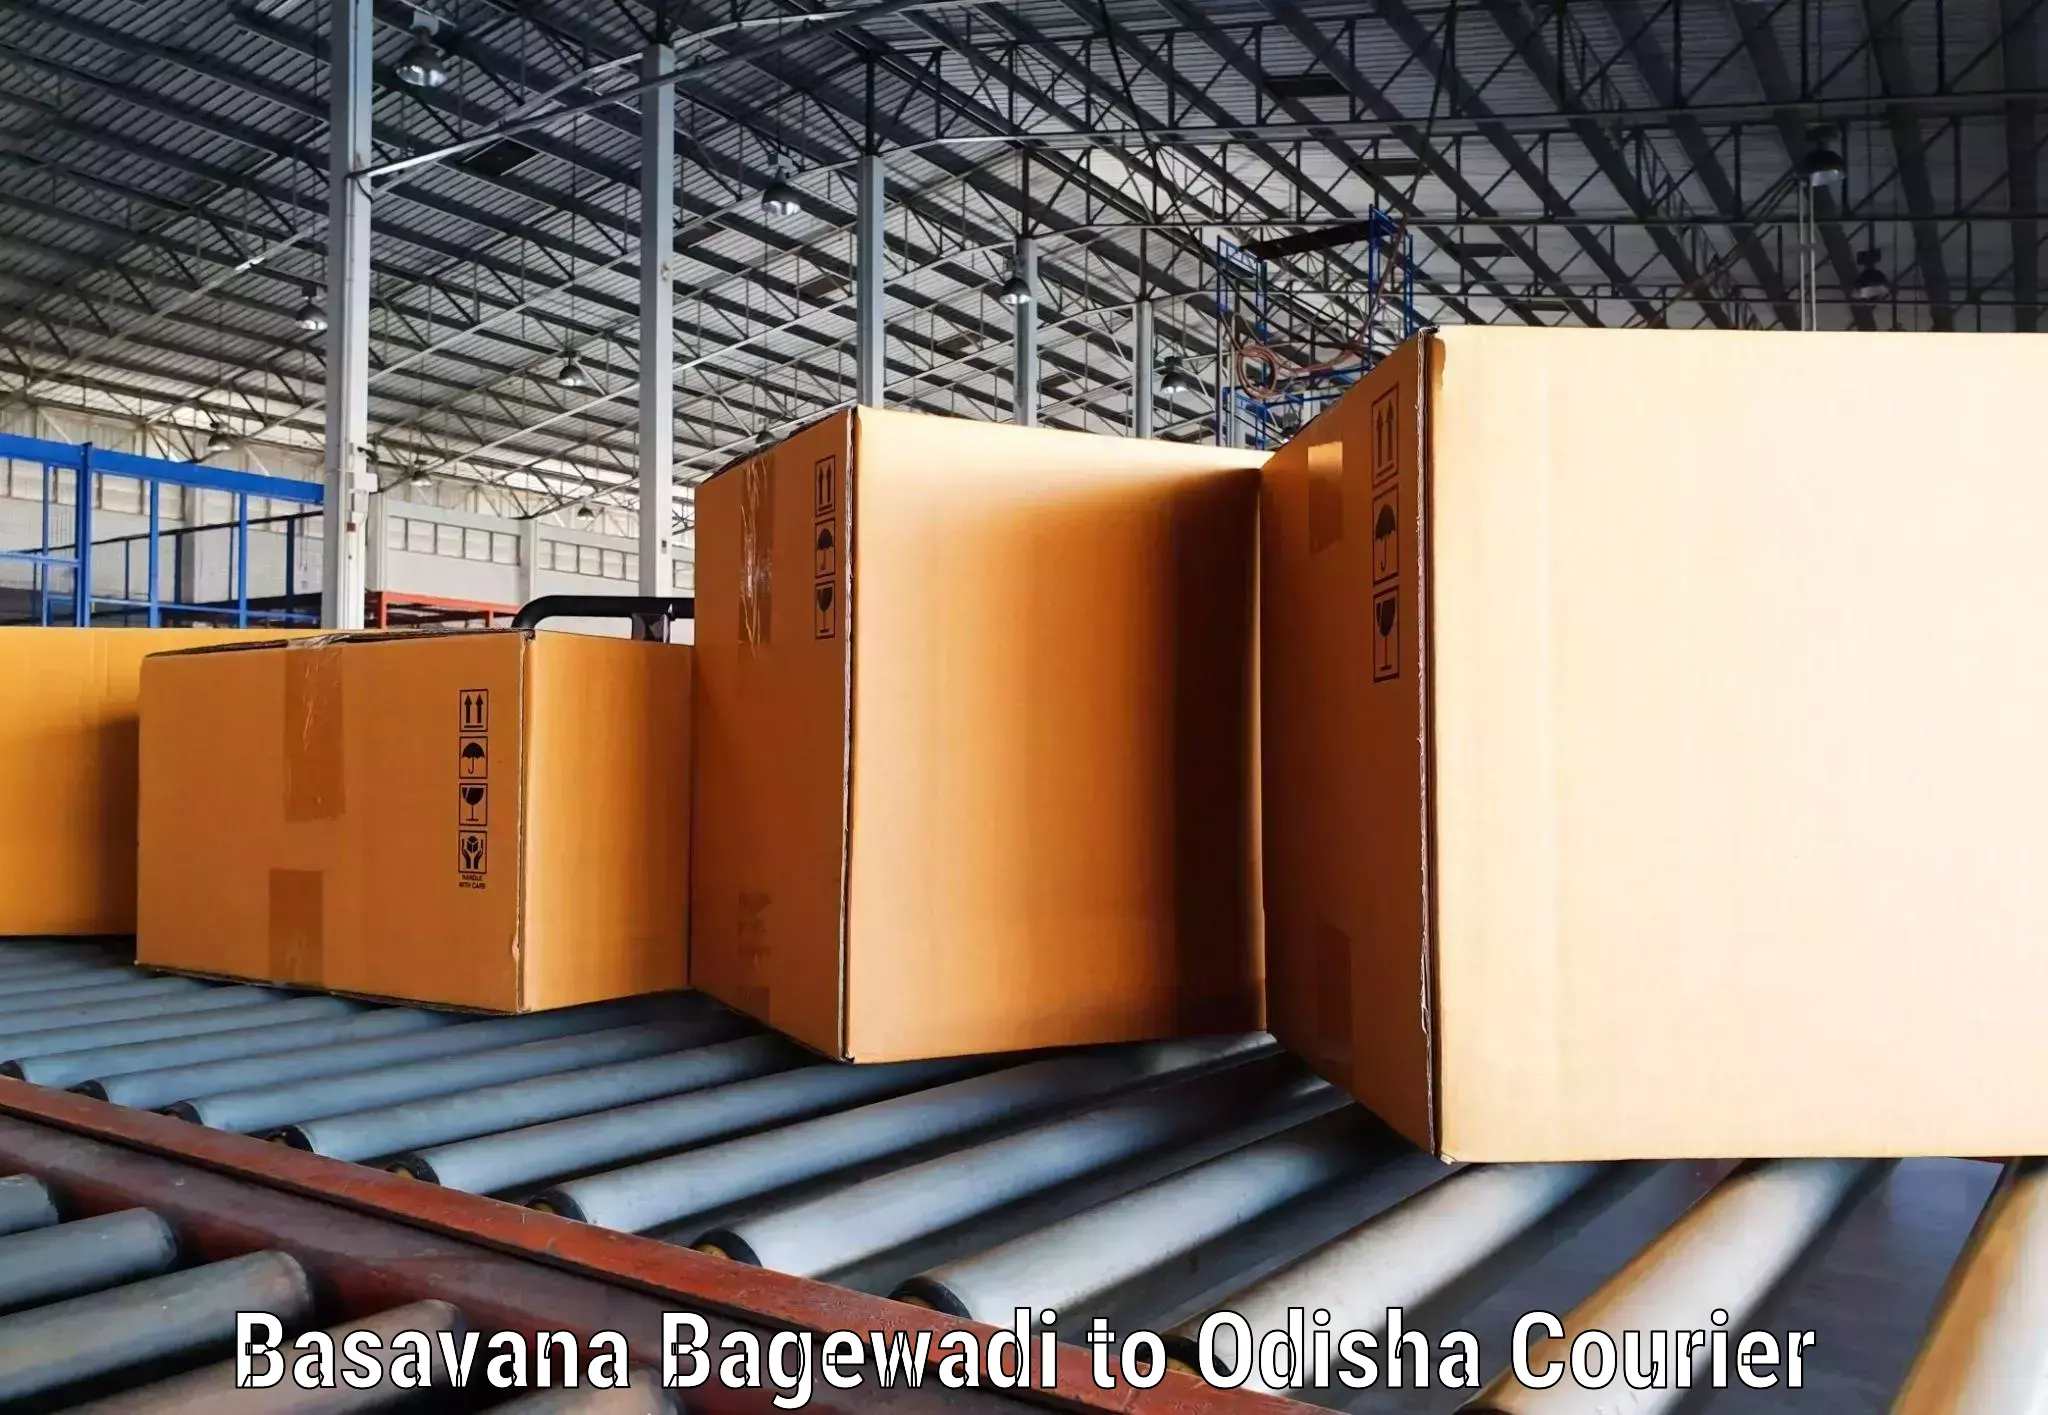 Global shipping networks Basavana Bagewadi to Dhamara